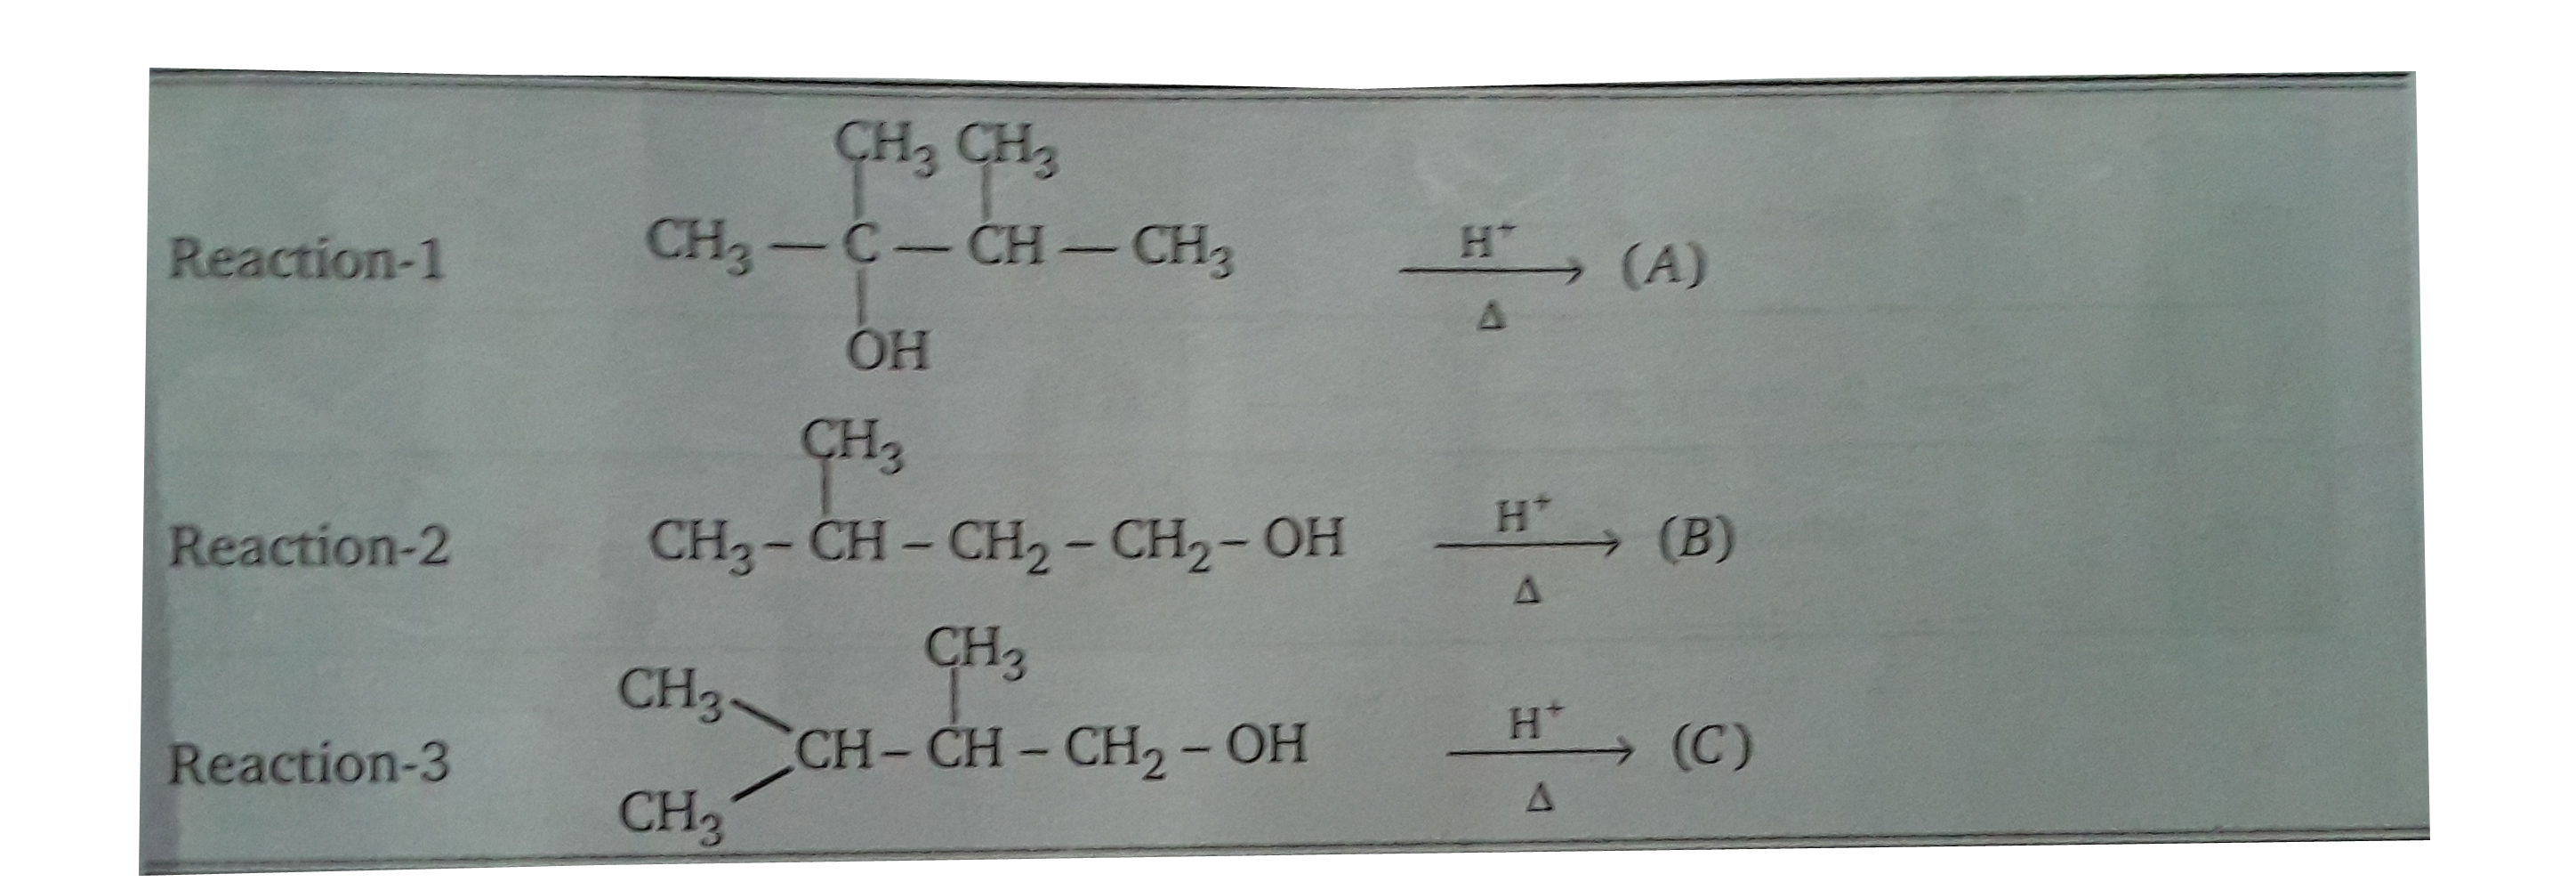 sum of alpha -hydrogen is (A+B+C=)